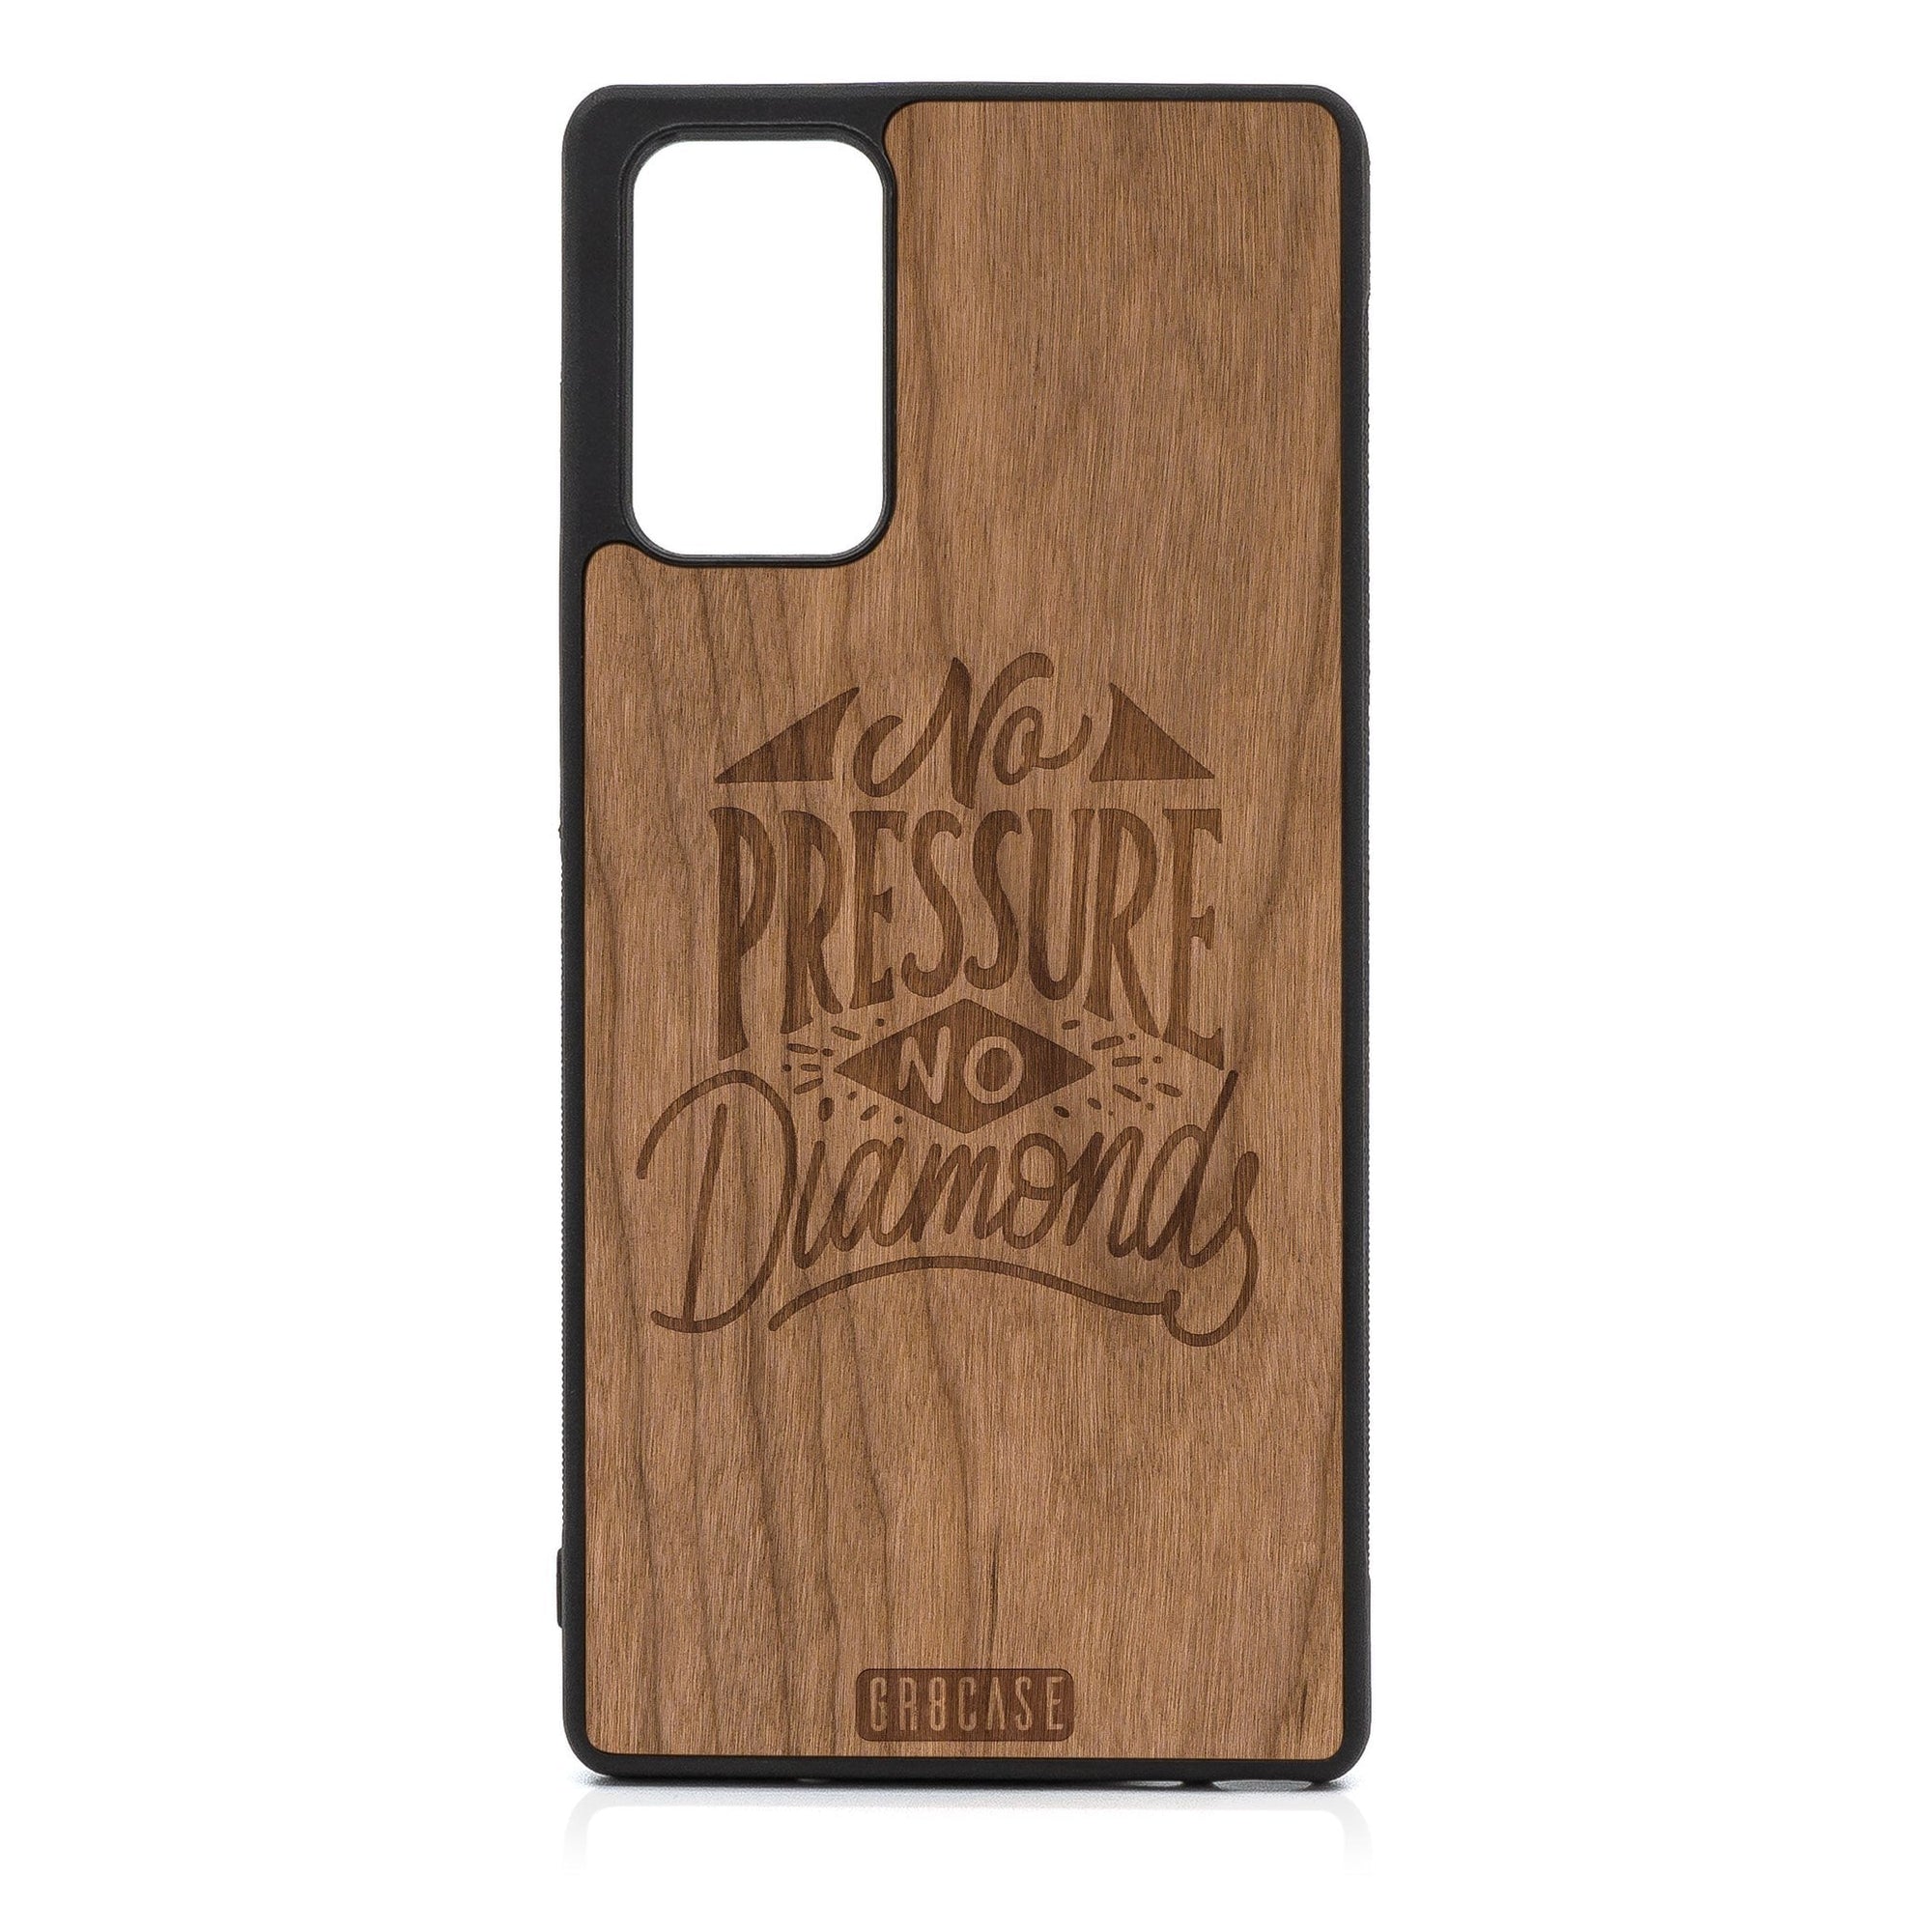 No Pressure No Diamonds Design Wood Case For Samsung Galaxy A72 5G